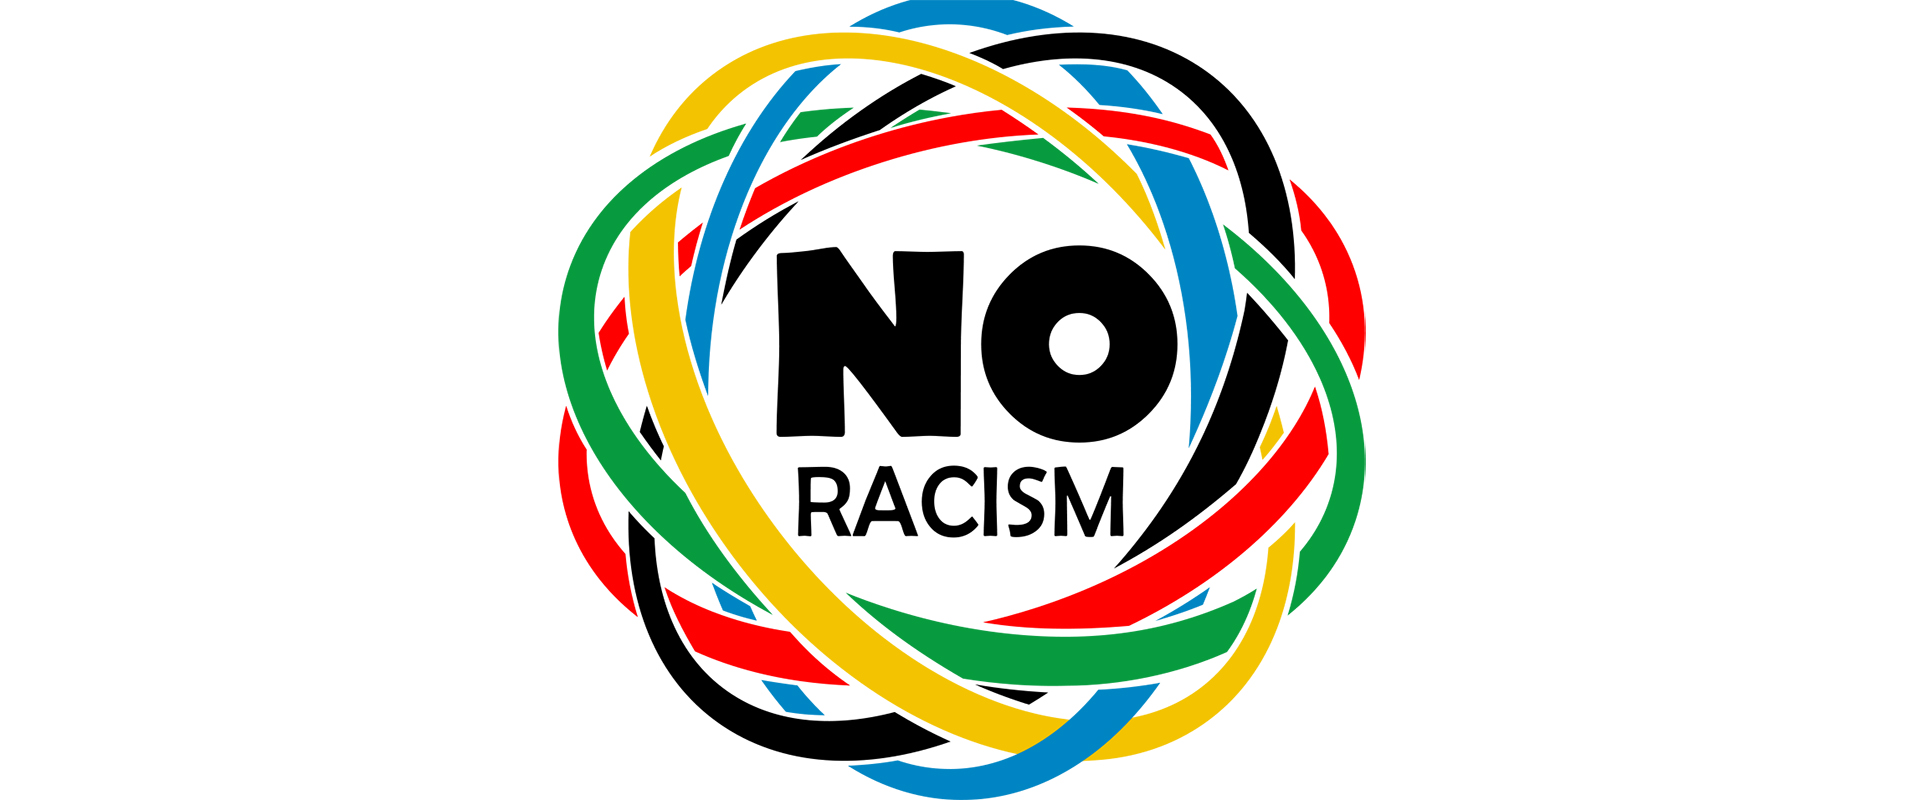 Il logo della campagna No racism